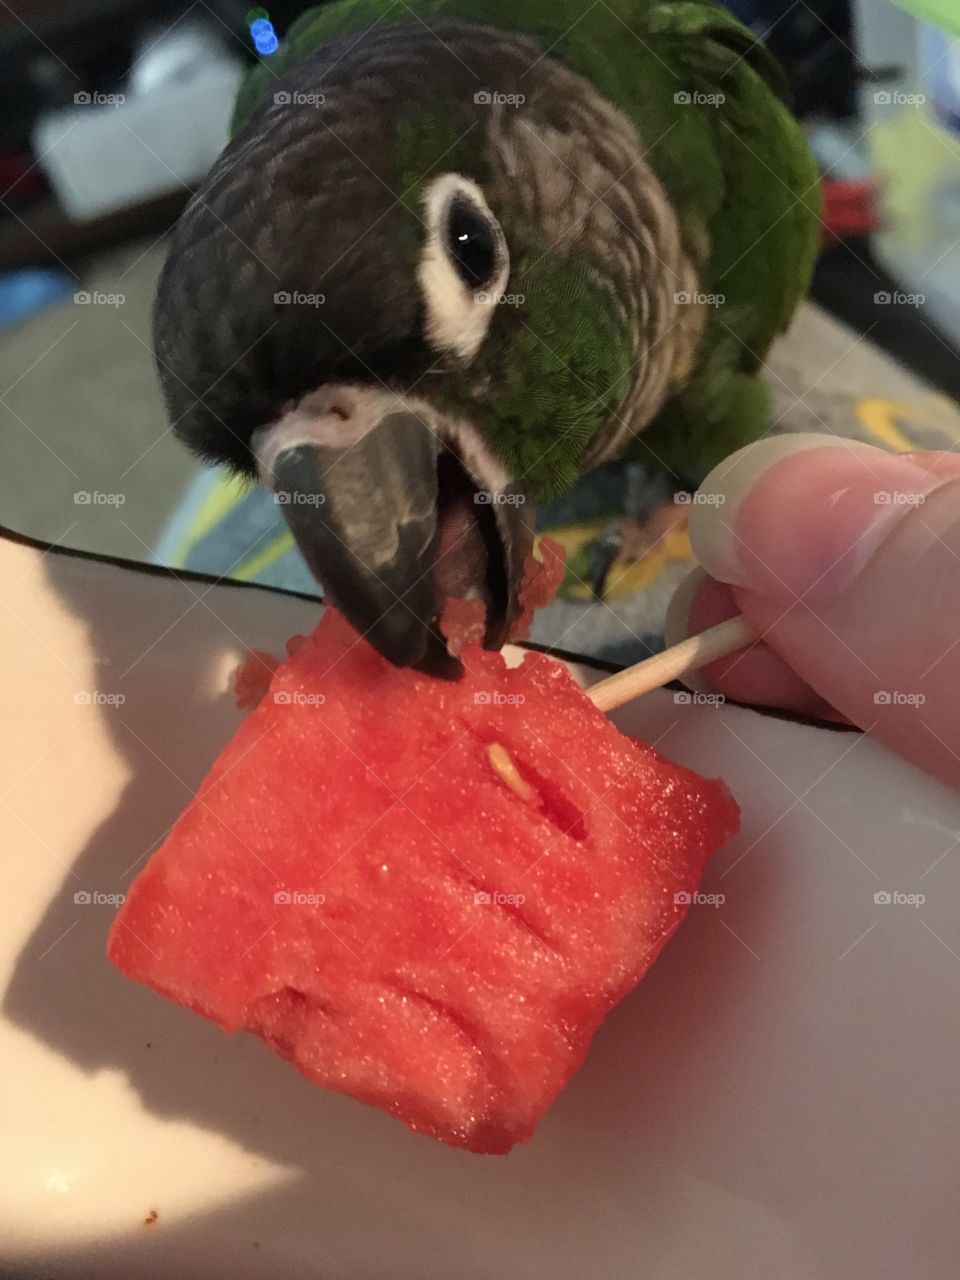 Watermelon time 